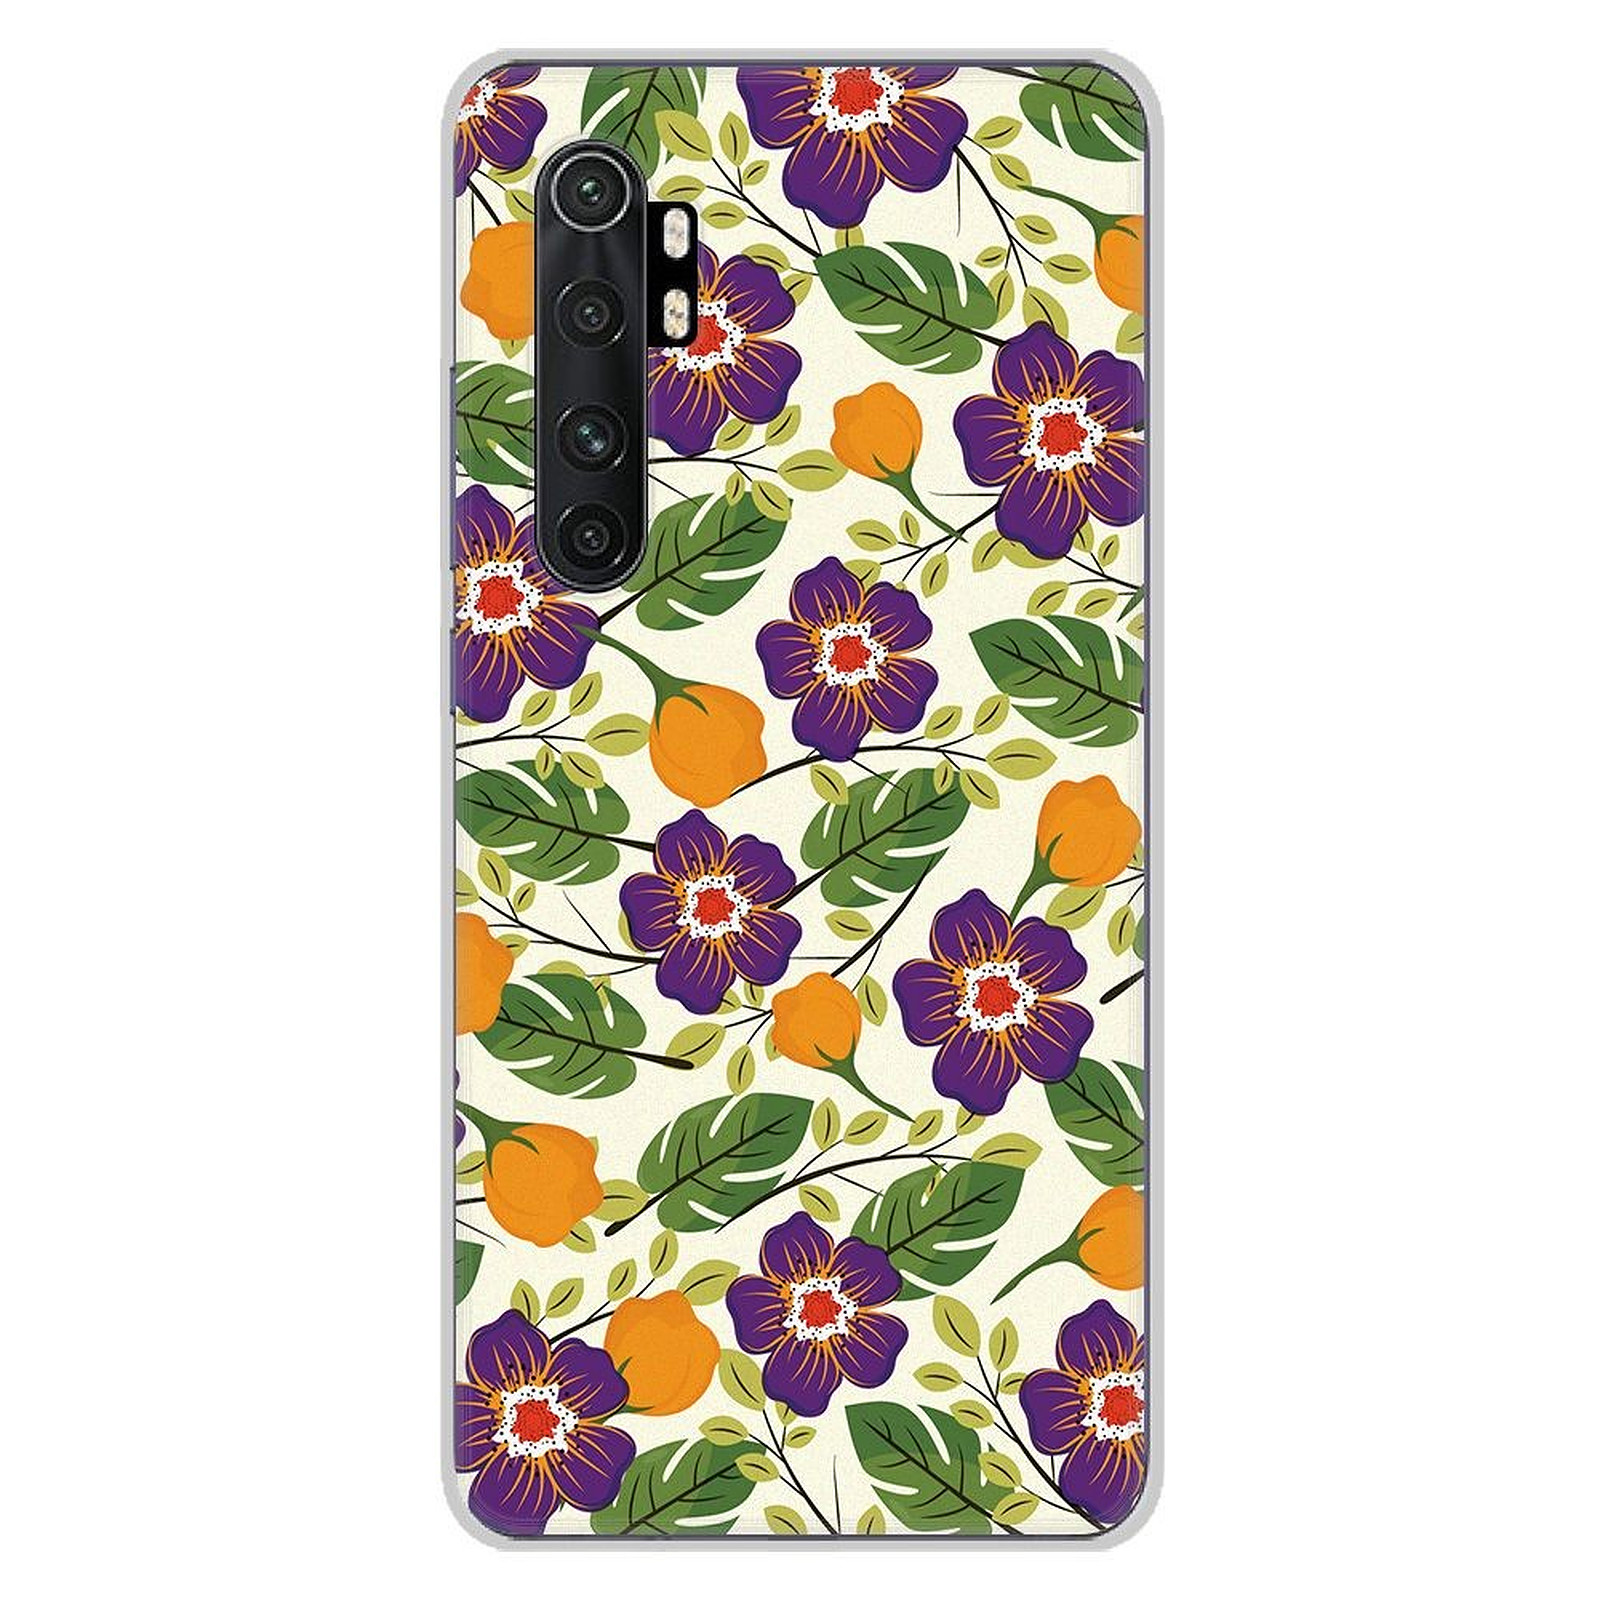 1001 Coques Coque silicone gel Xiaomi Mi Note 10 lite motif Fleurs Violettes - Coque telephone 1001Coques